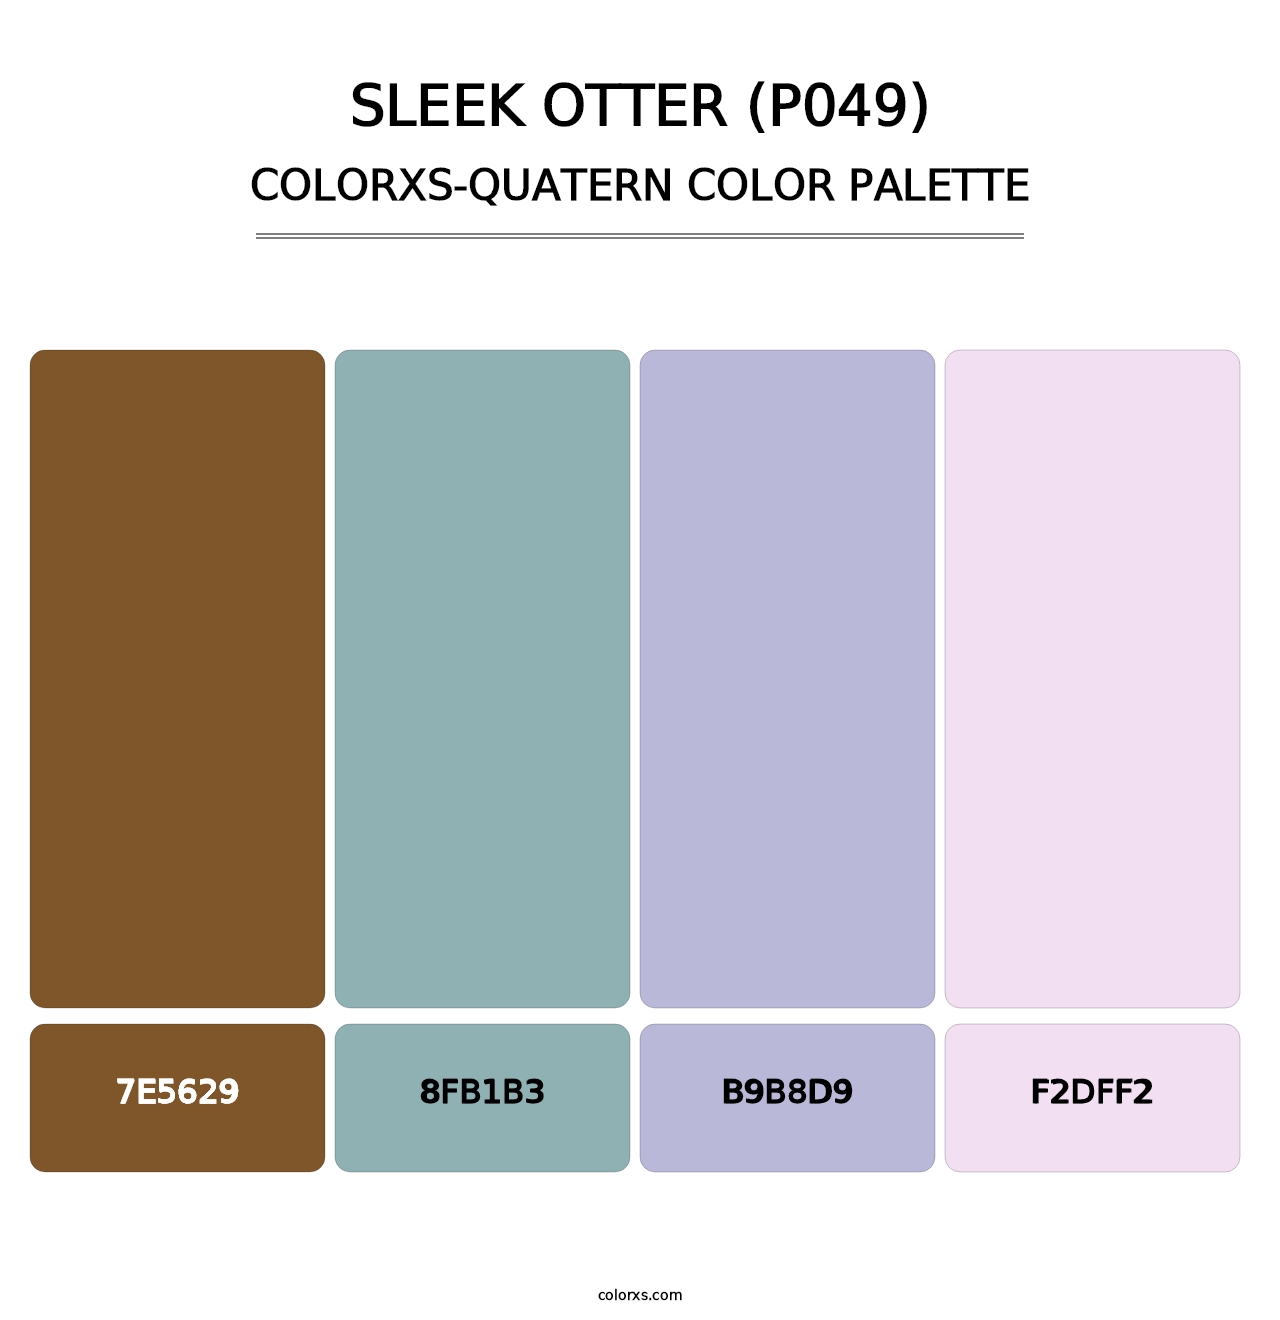 Sleek Otter (P049) - Colorxs Quatern Palette